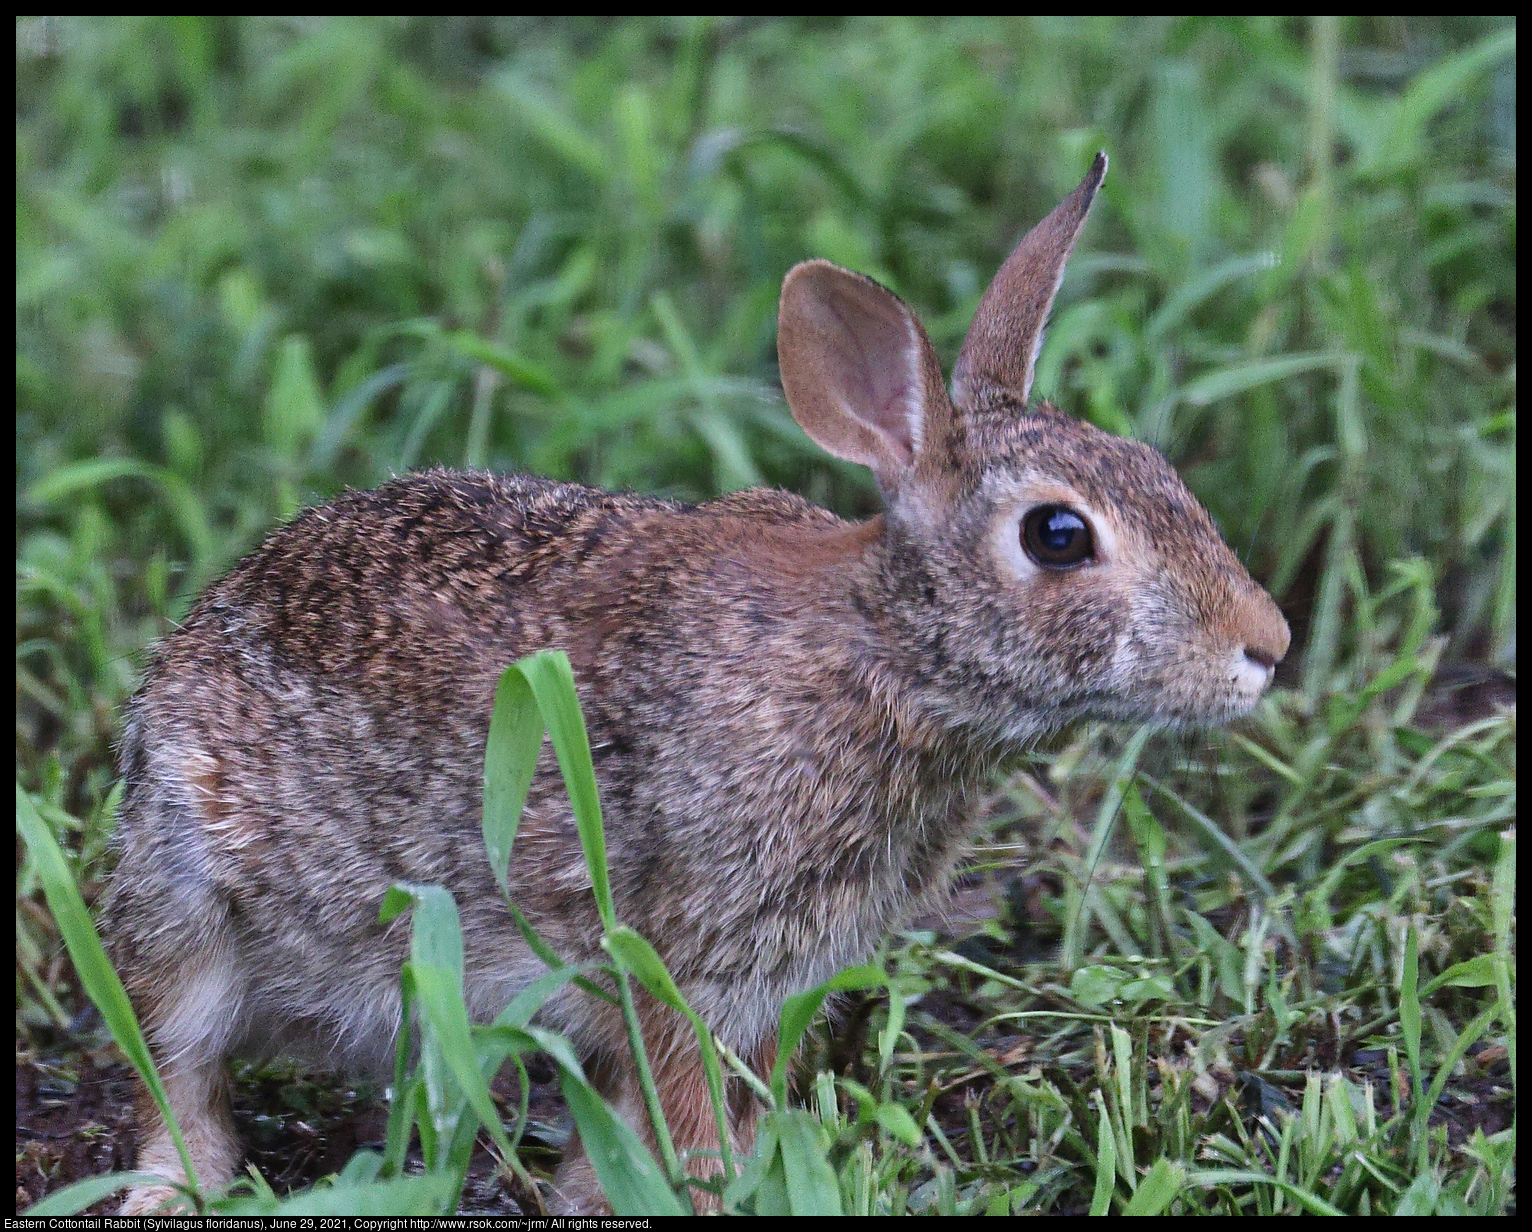 Eastern Cottontail Rabbit (Sylvilagus floridanus), June 29, 2021